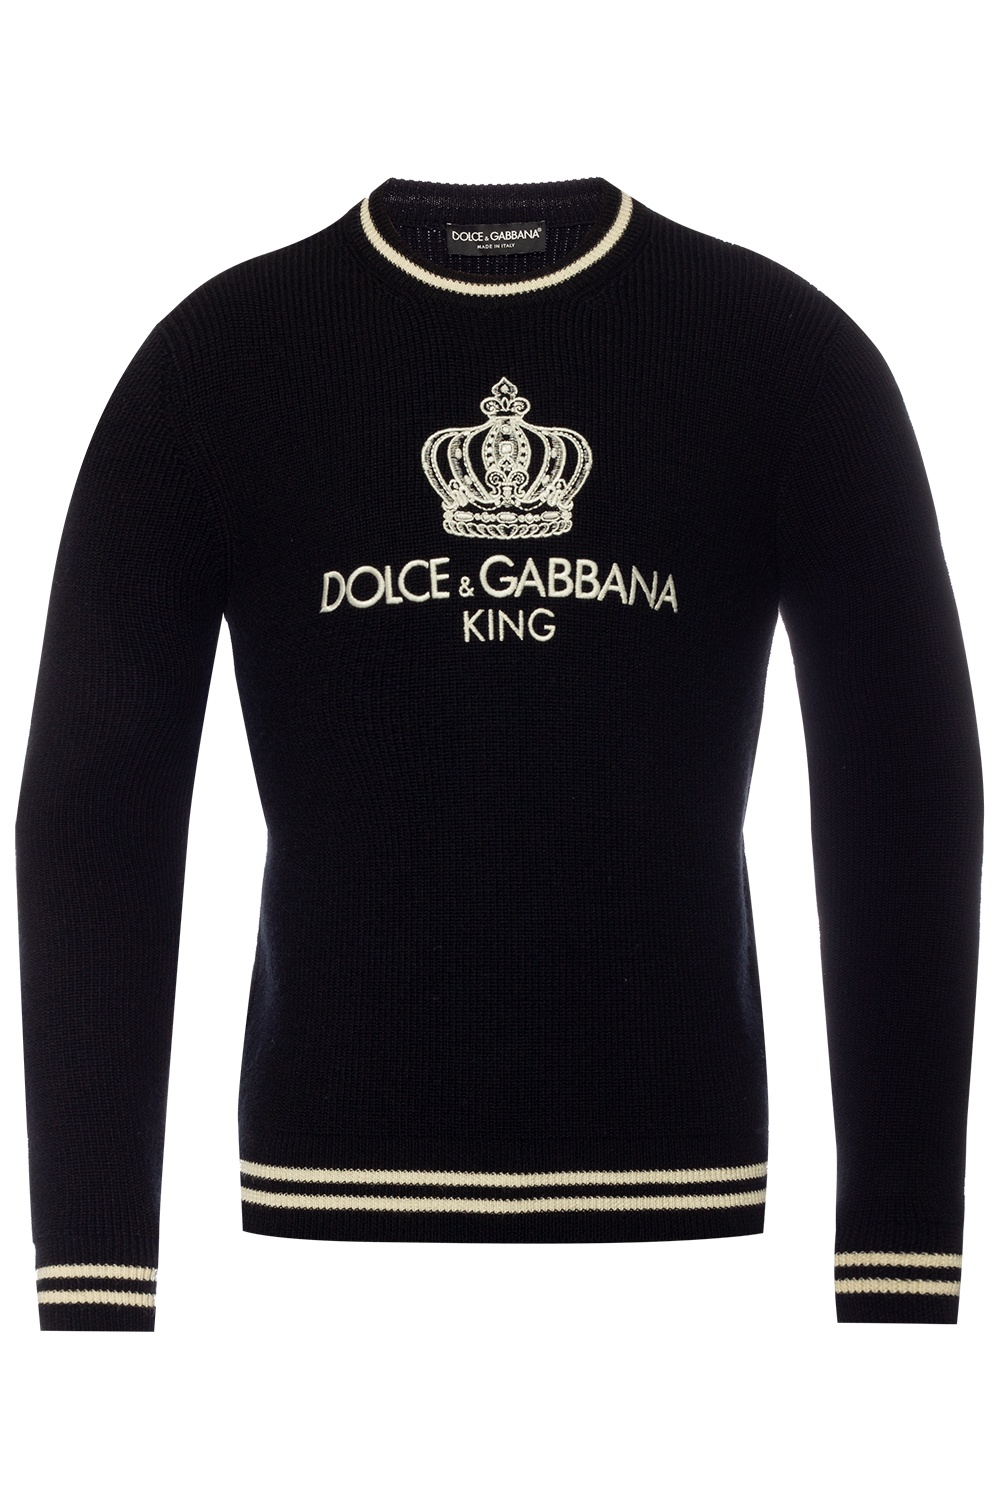 dolce and gabbana white sweater